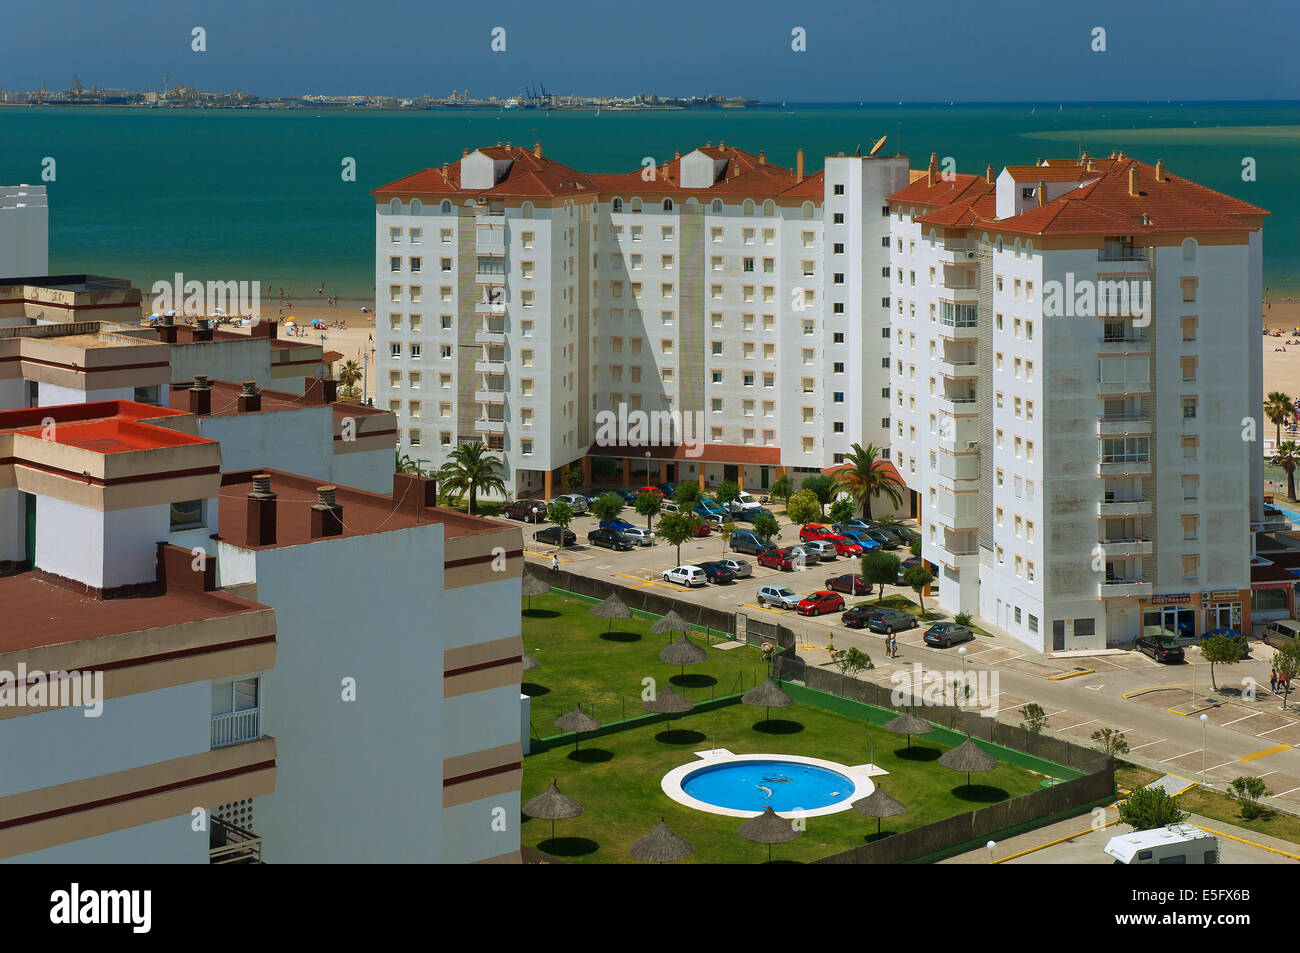 Blocks of flats near to sea, El Puerto de Santa Maria, (Cadiz city in the background), Cadiz-province, Andalusia, Spain, Europe Stock Photo